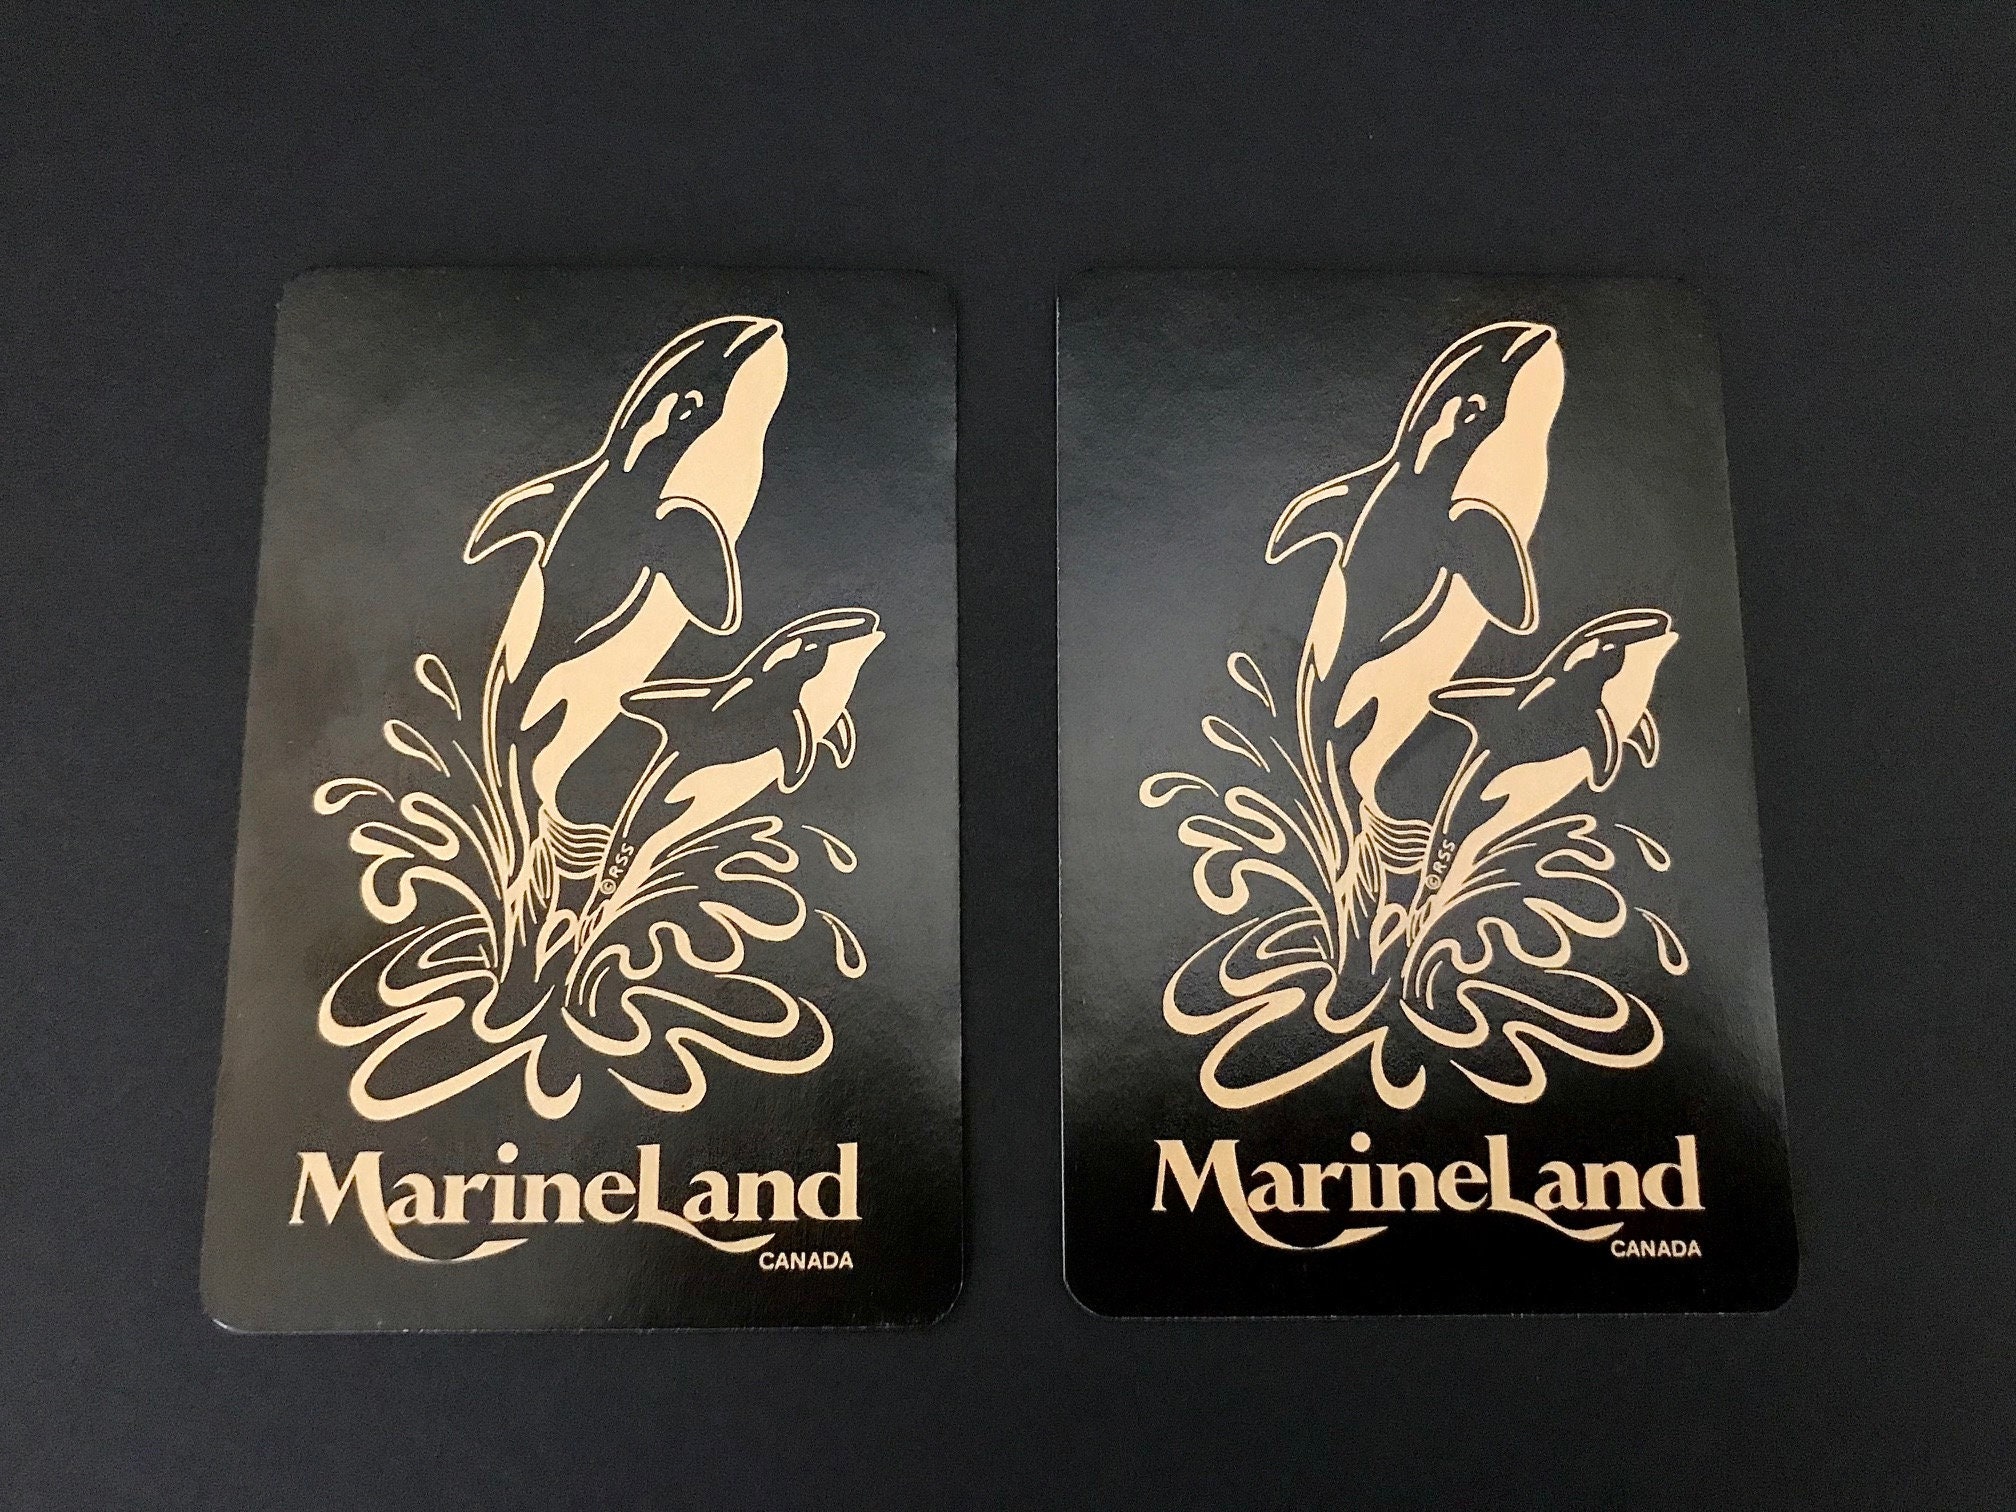 Lot of 4 Joker Card Cards Jokers Marineland Canada Black Gold